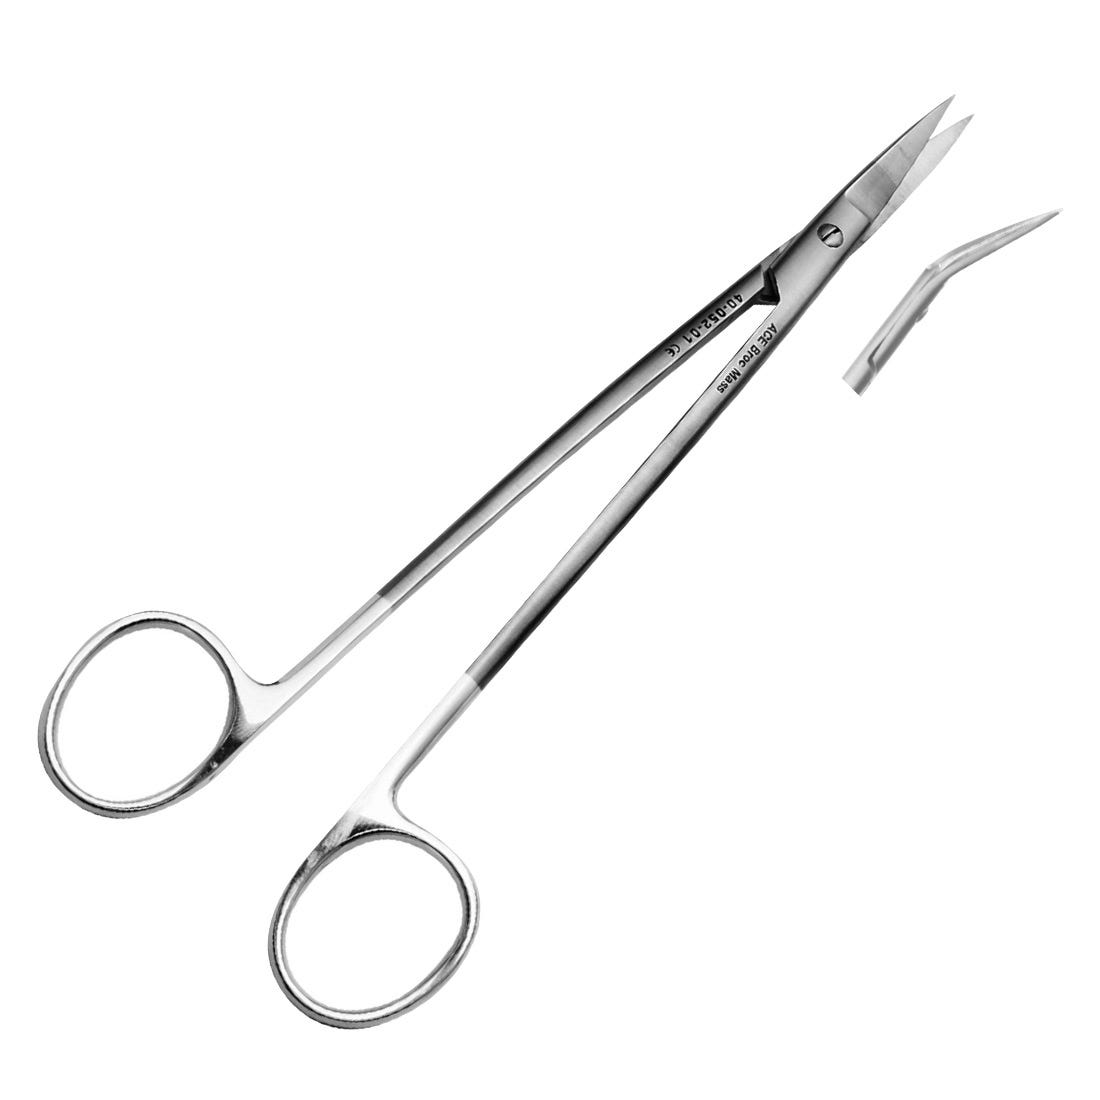 ACE #9 Dean Scissors, 1 blade serrated ,tungsten carbide tips